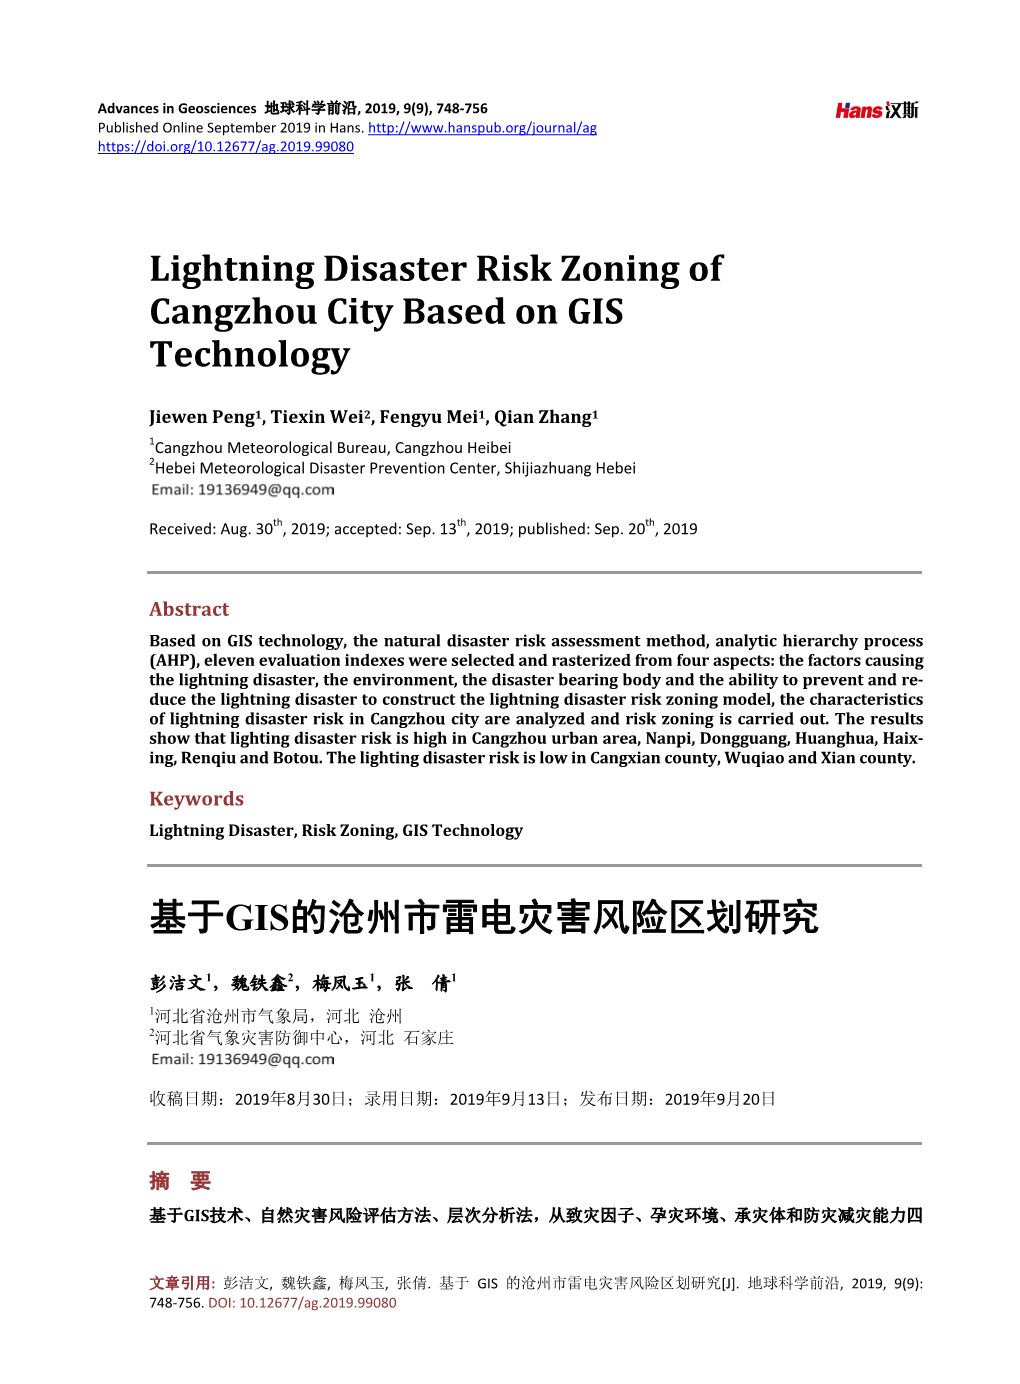 Lightning Disaster Risk Zoning of Cangzhou City Based on GIS Technology